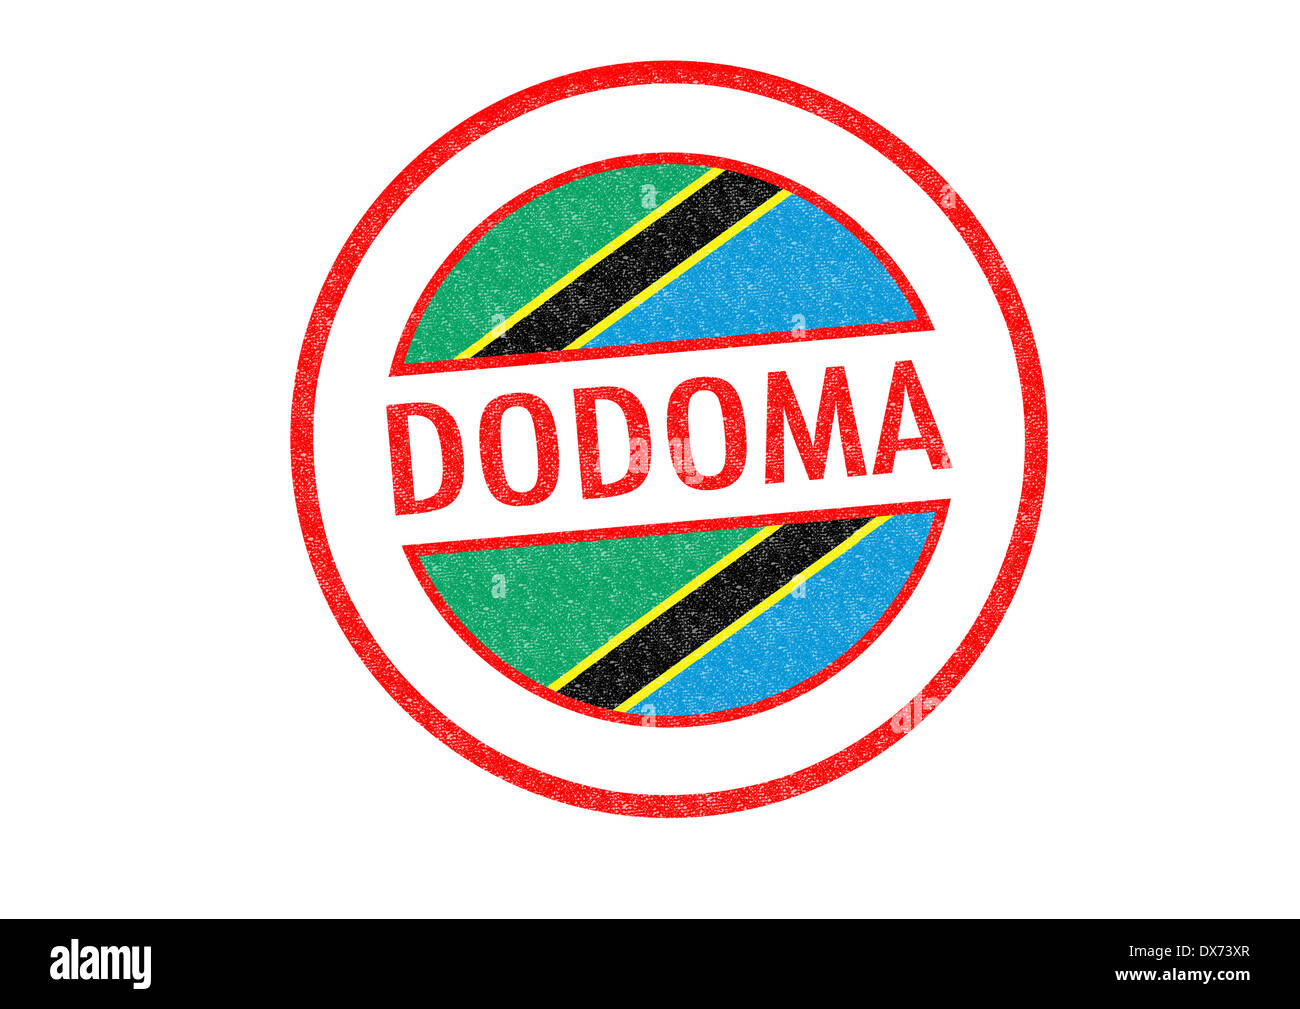 Passport-style DODOMA (Tanzania) rubber stamp over a white background. Stock Photo